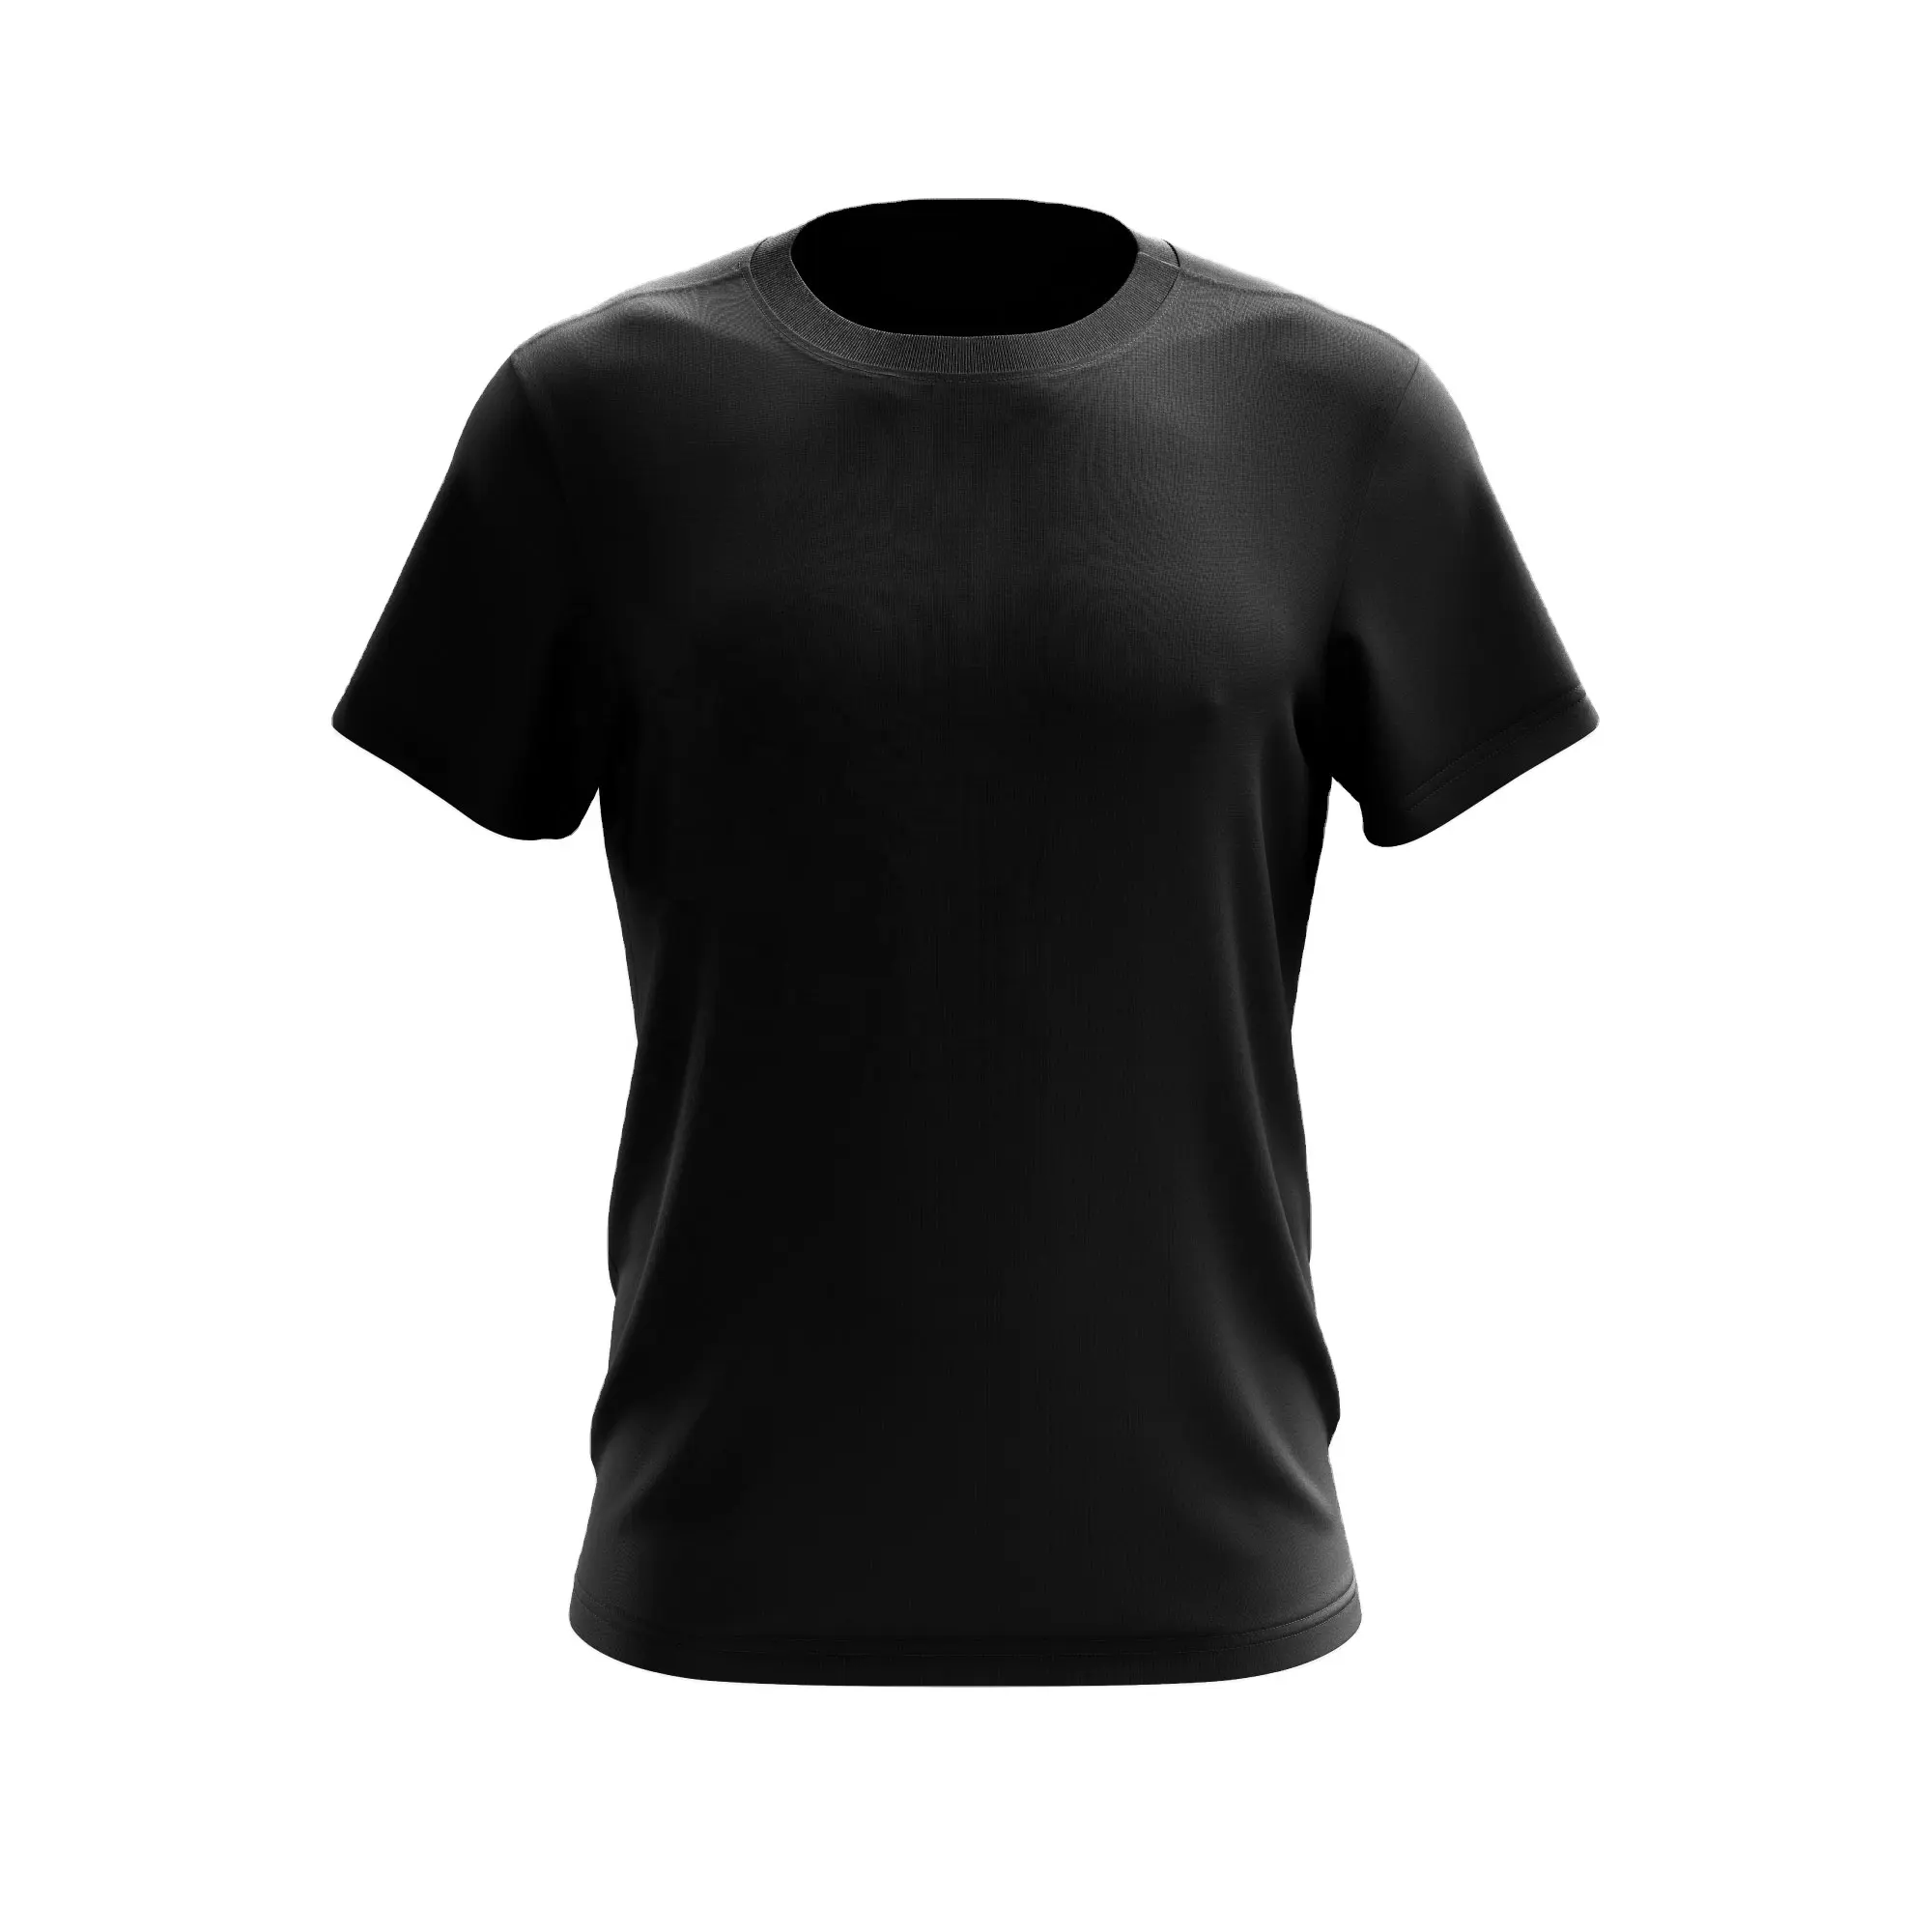 888.co UltraFlex Round neck Short sleeve T shirt Polyester Spandex Microfiber T-shirt Clothing Women Men Black